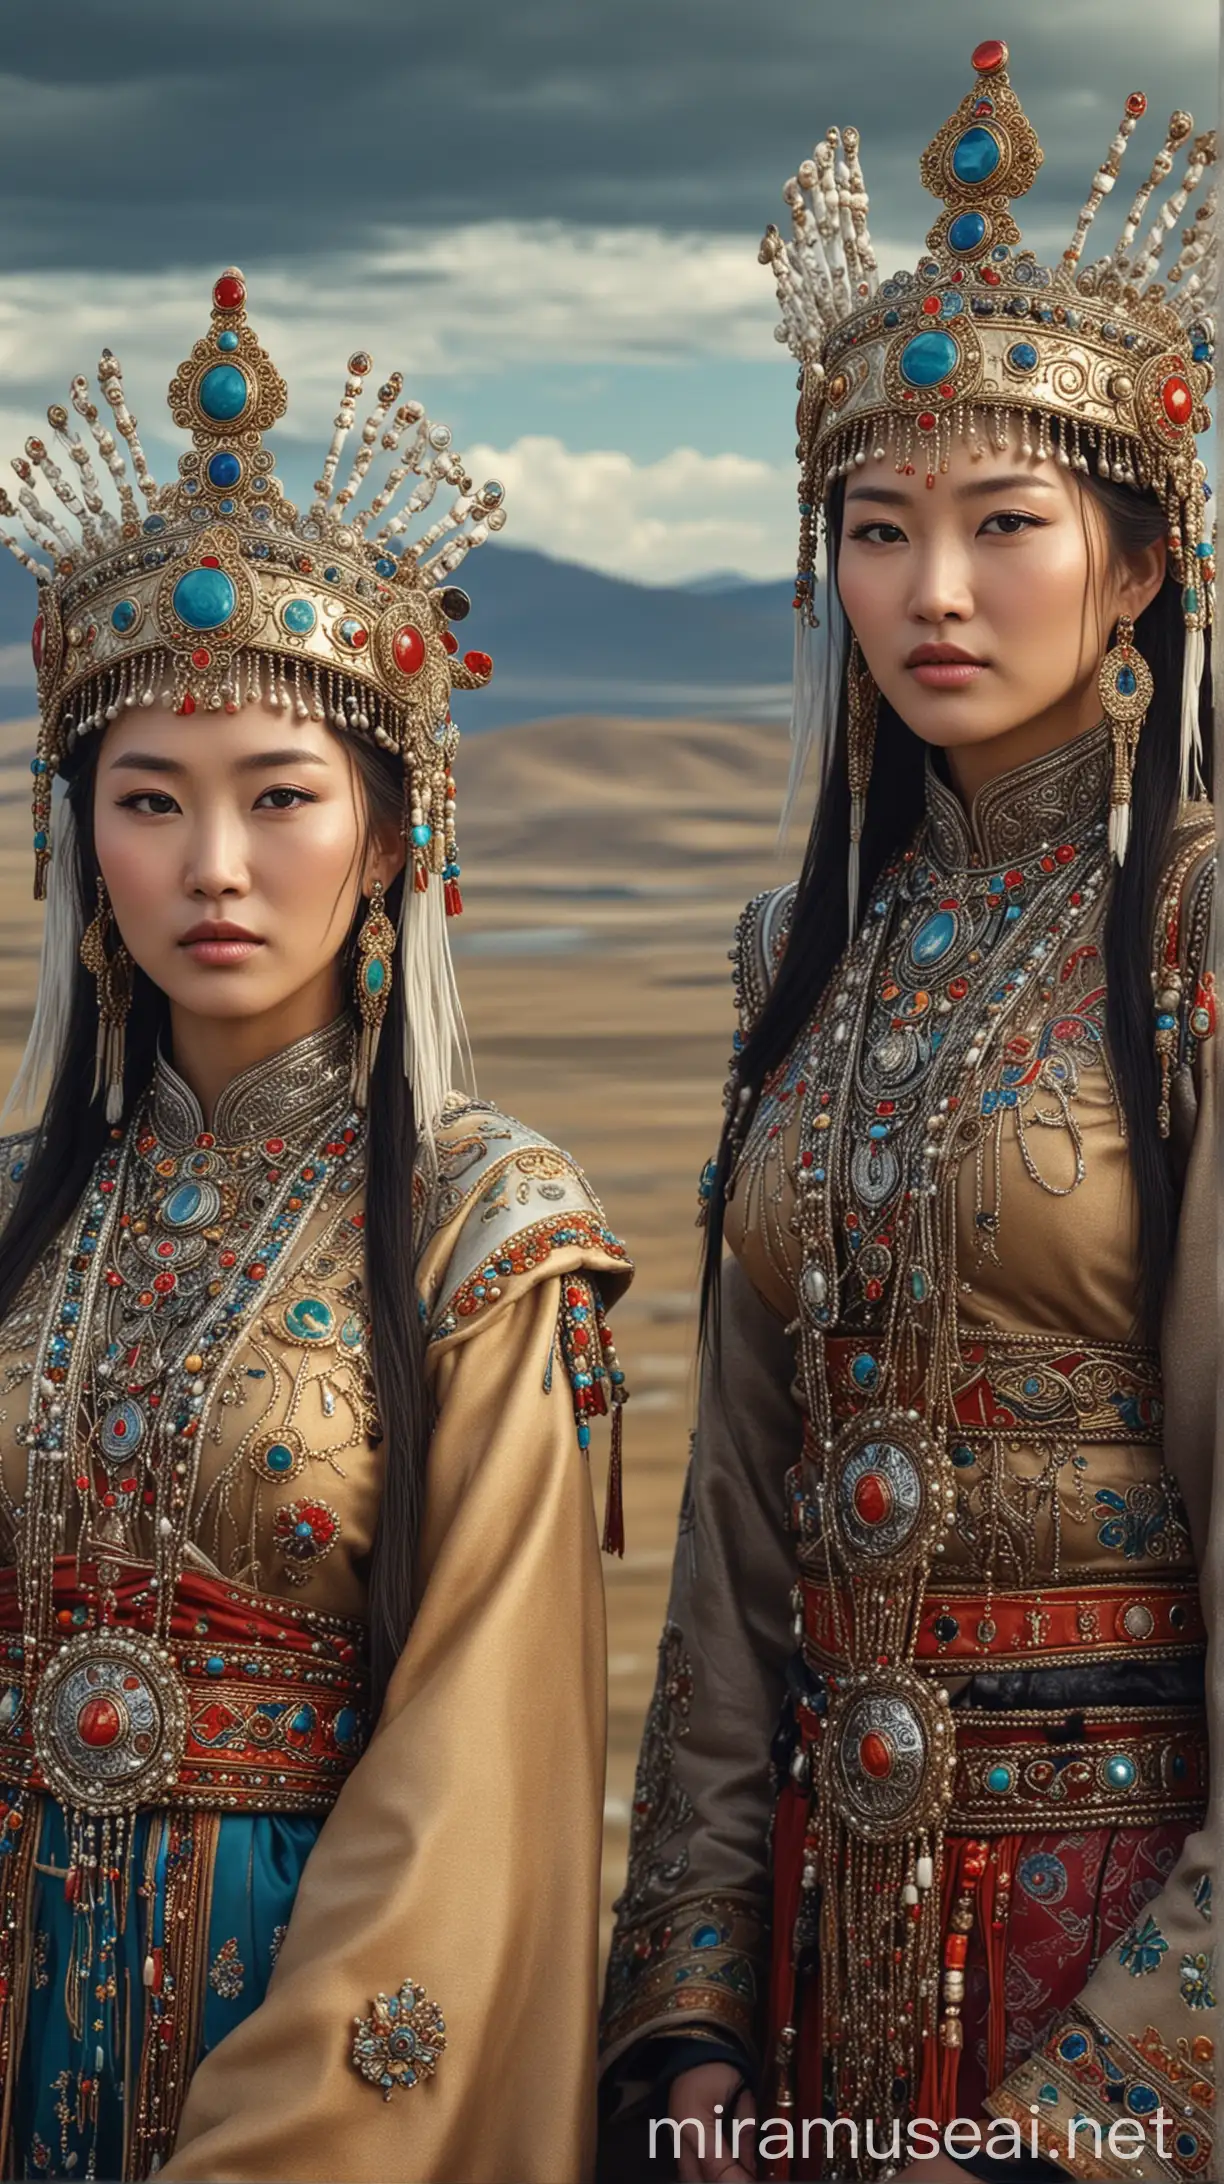 Elaborate Mongol Women Headdresses Amid Vast Landscape